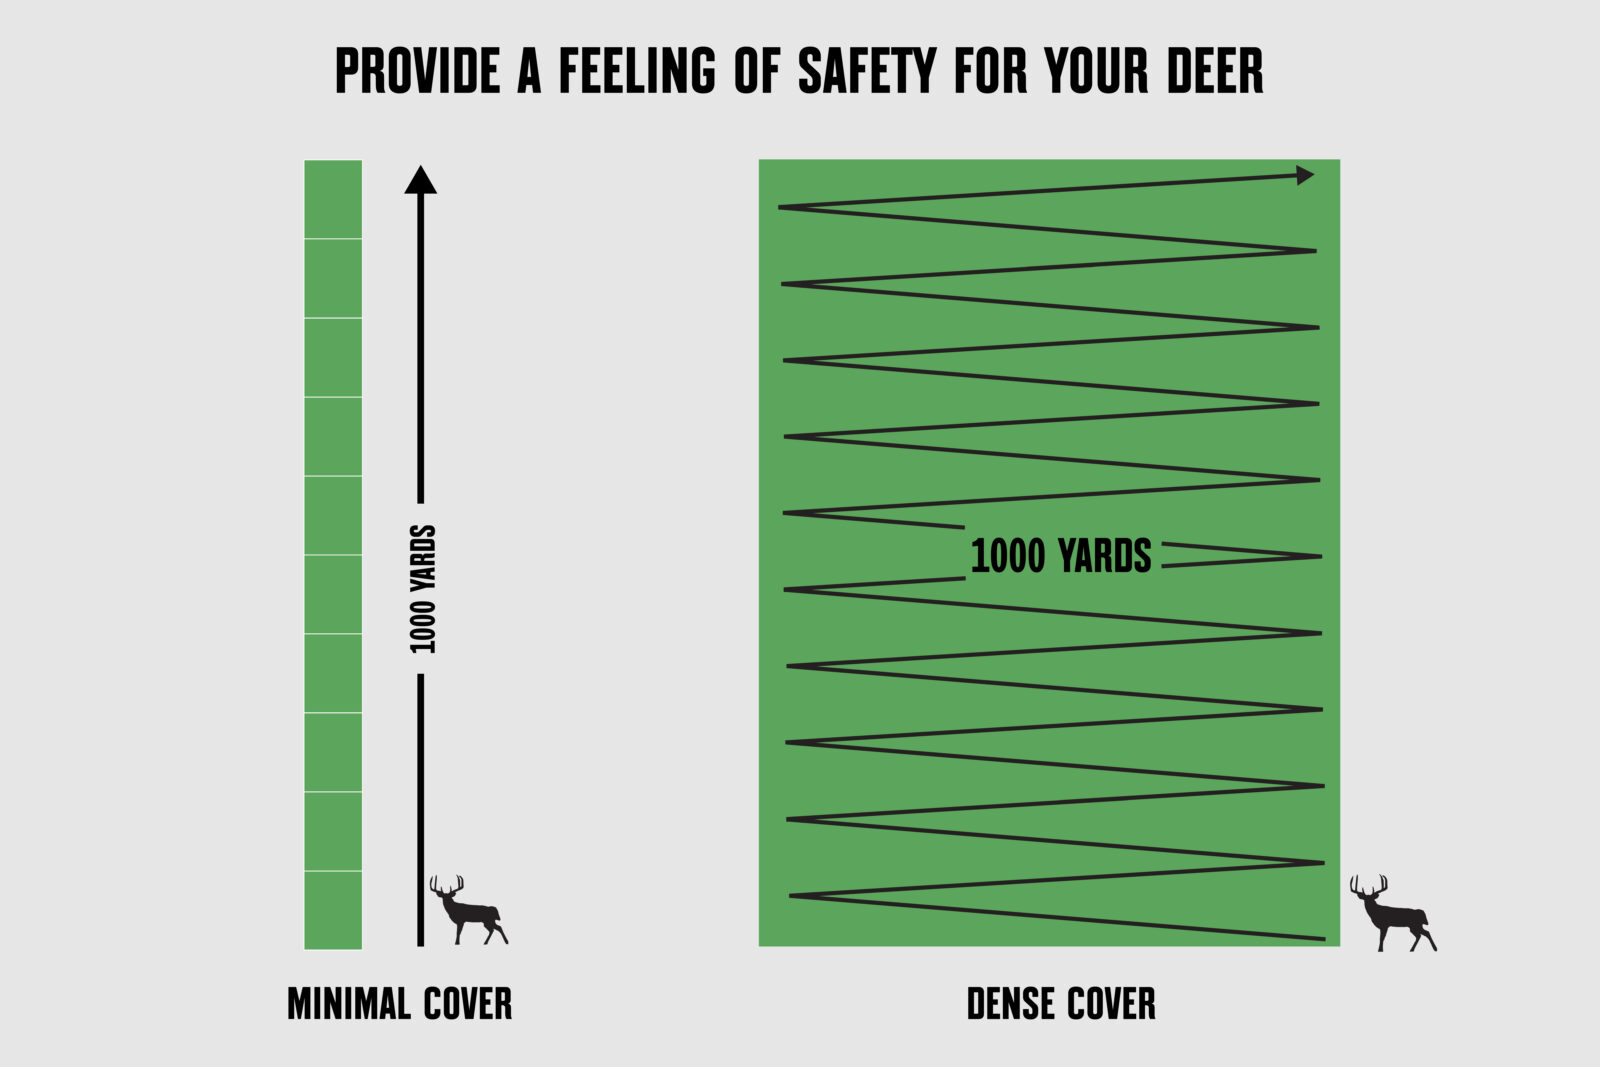 A diagram showing minimal cover vs. dense cover for deer. 